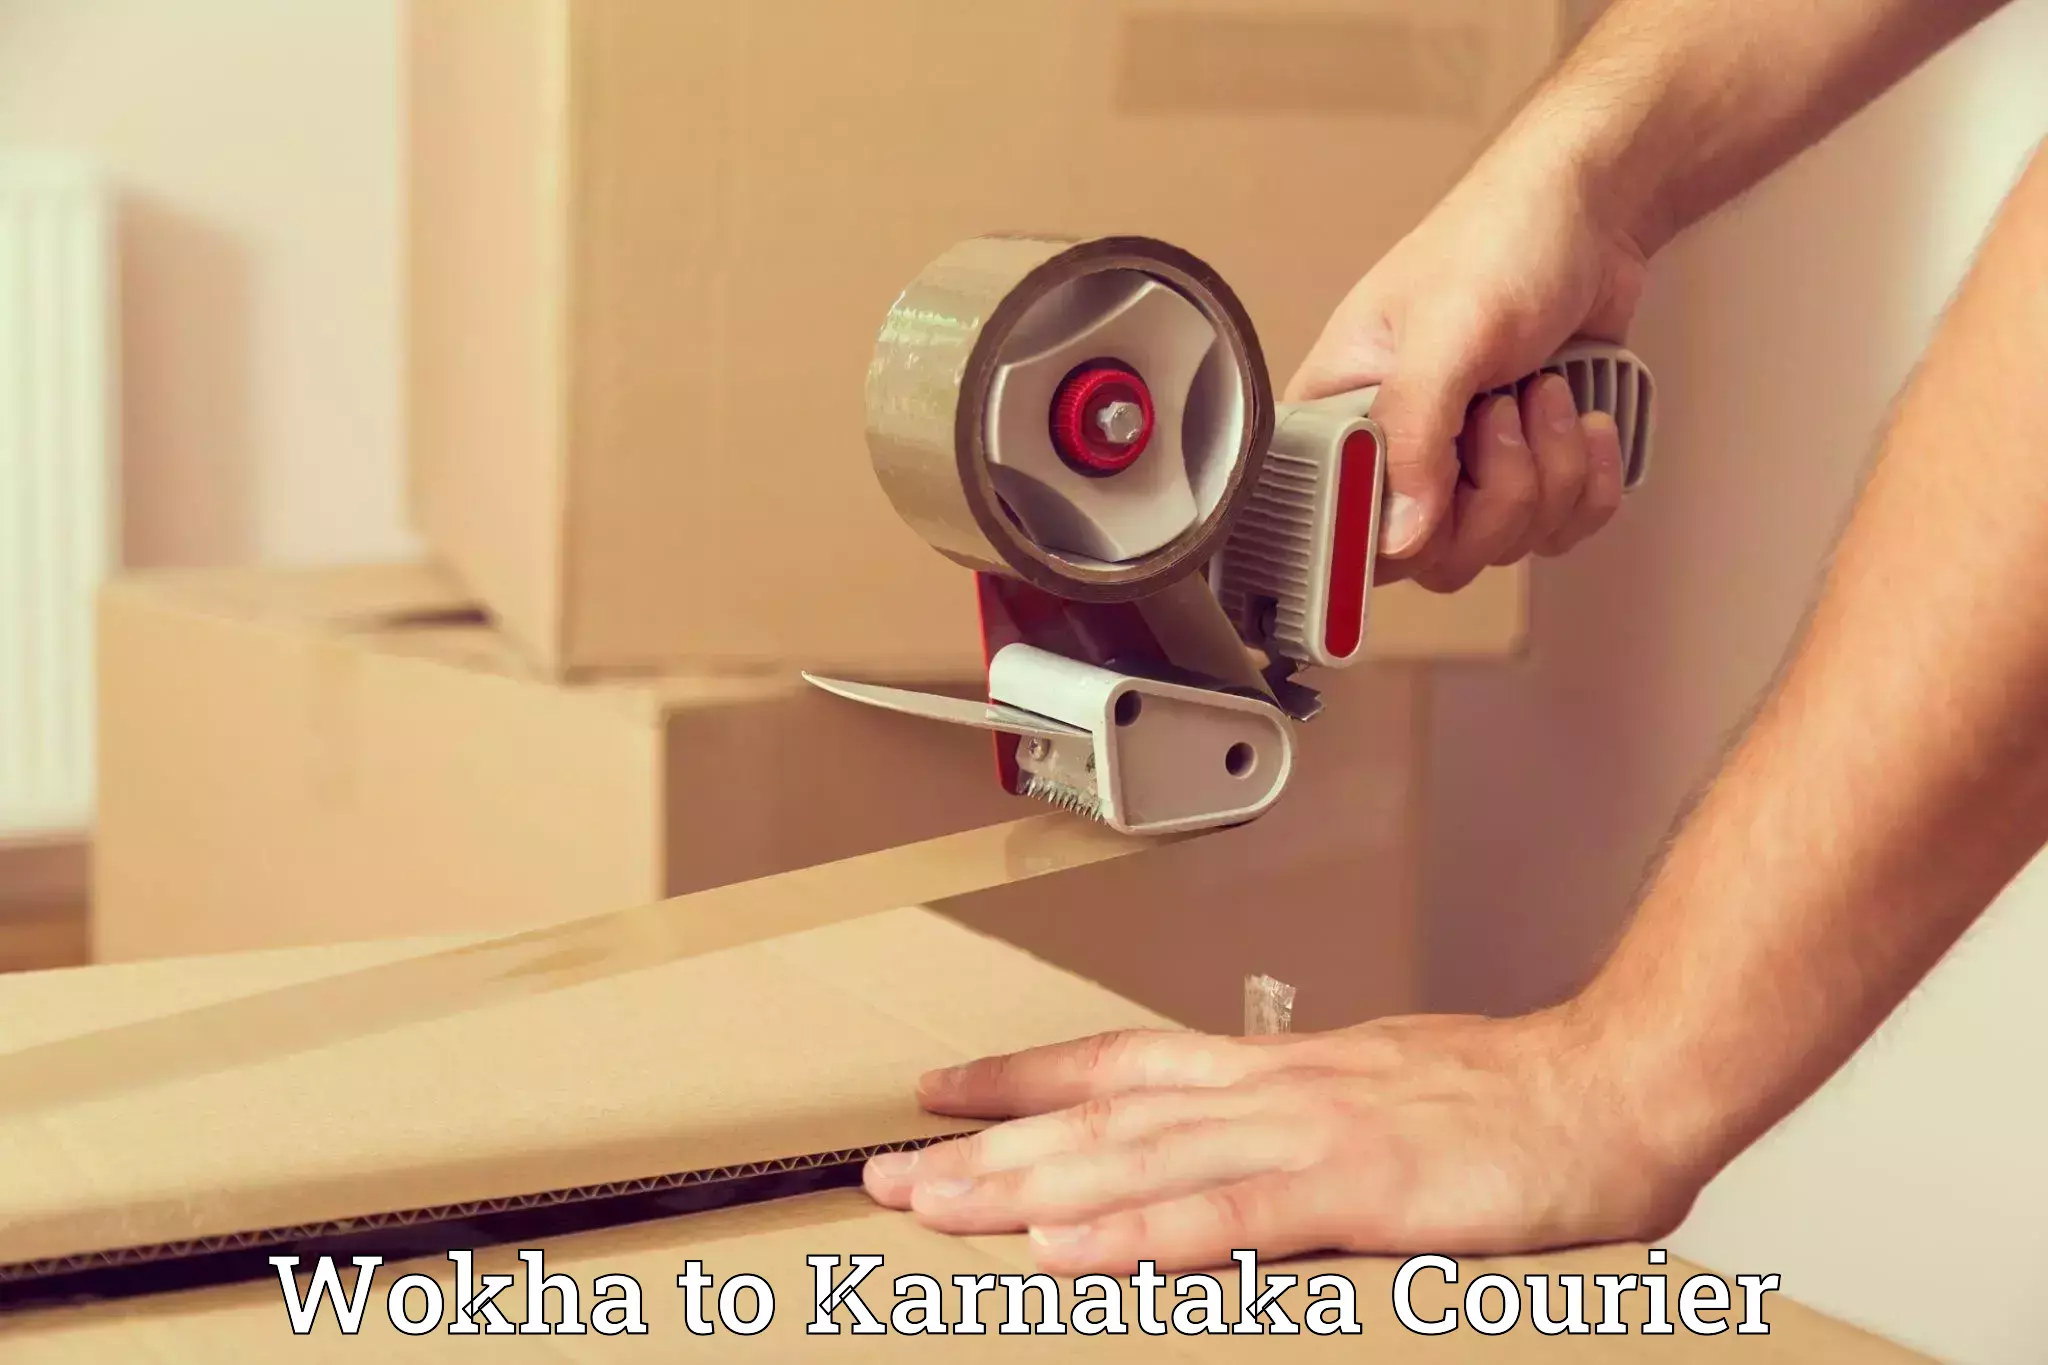 Moving and handling services Wokha to Karnataka